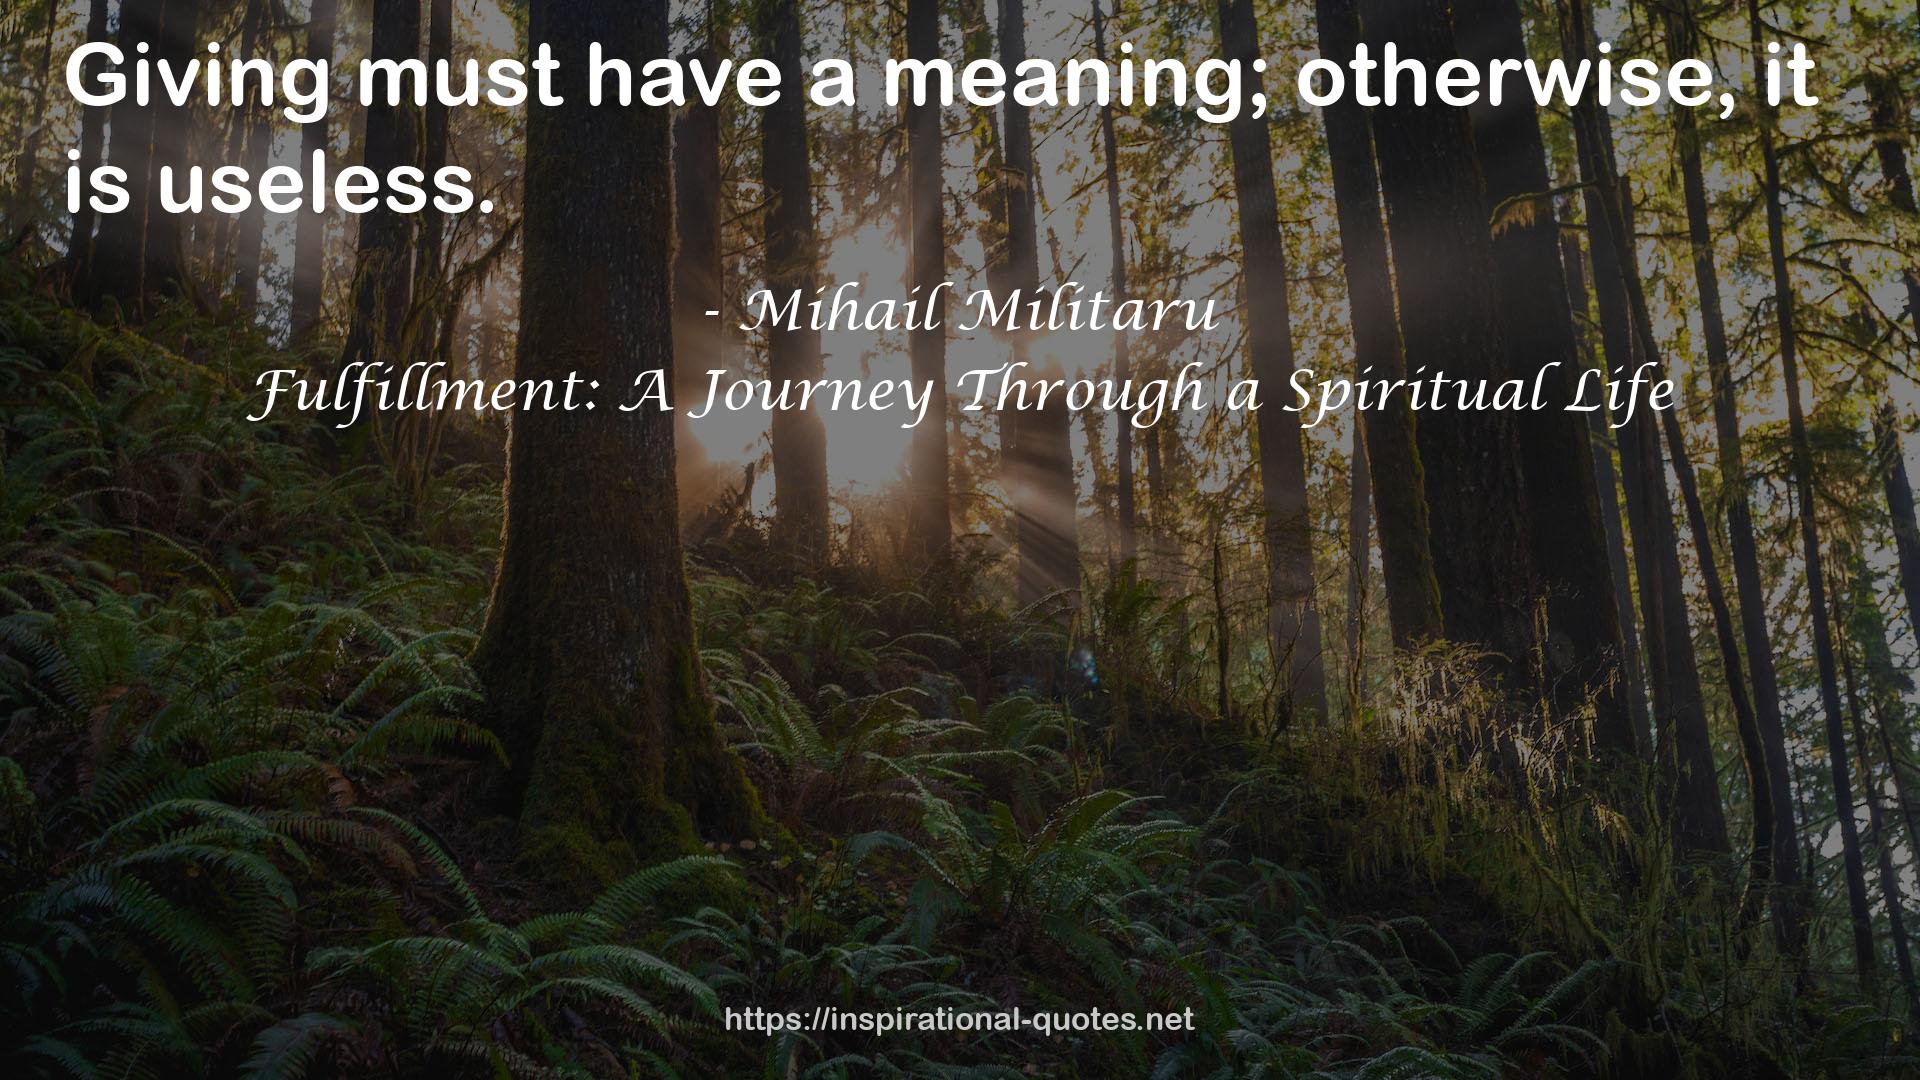 Fulfillment: A Journey Through a Spiritual Life QUOTES